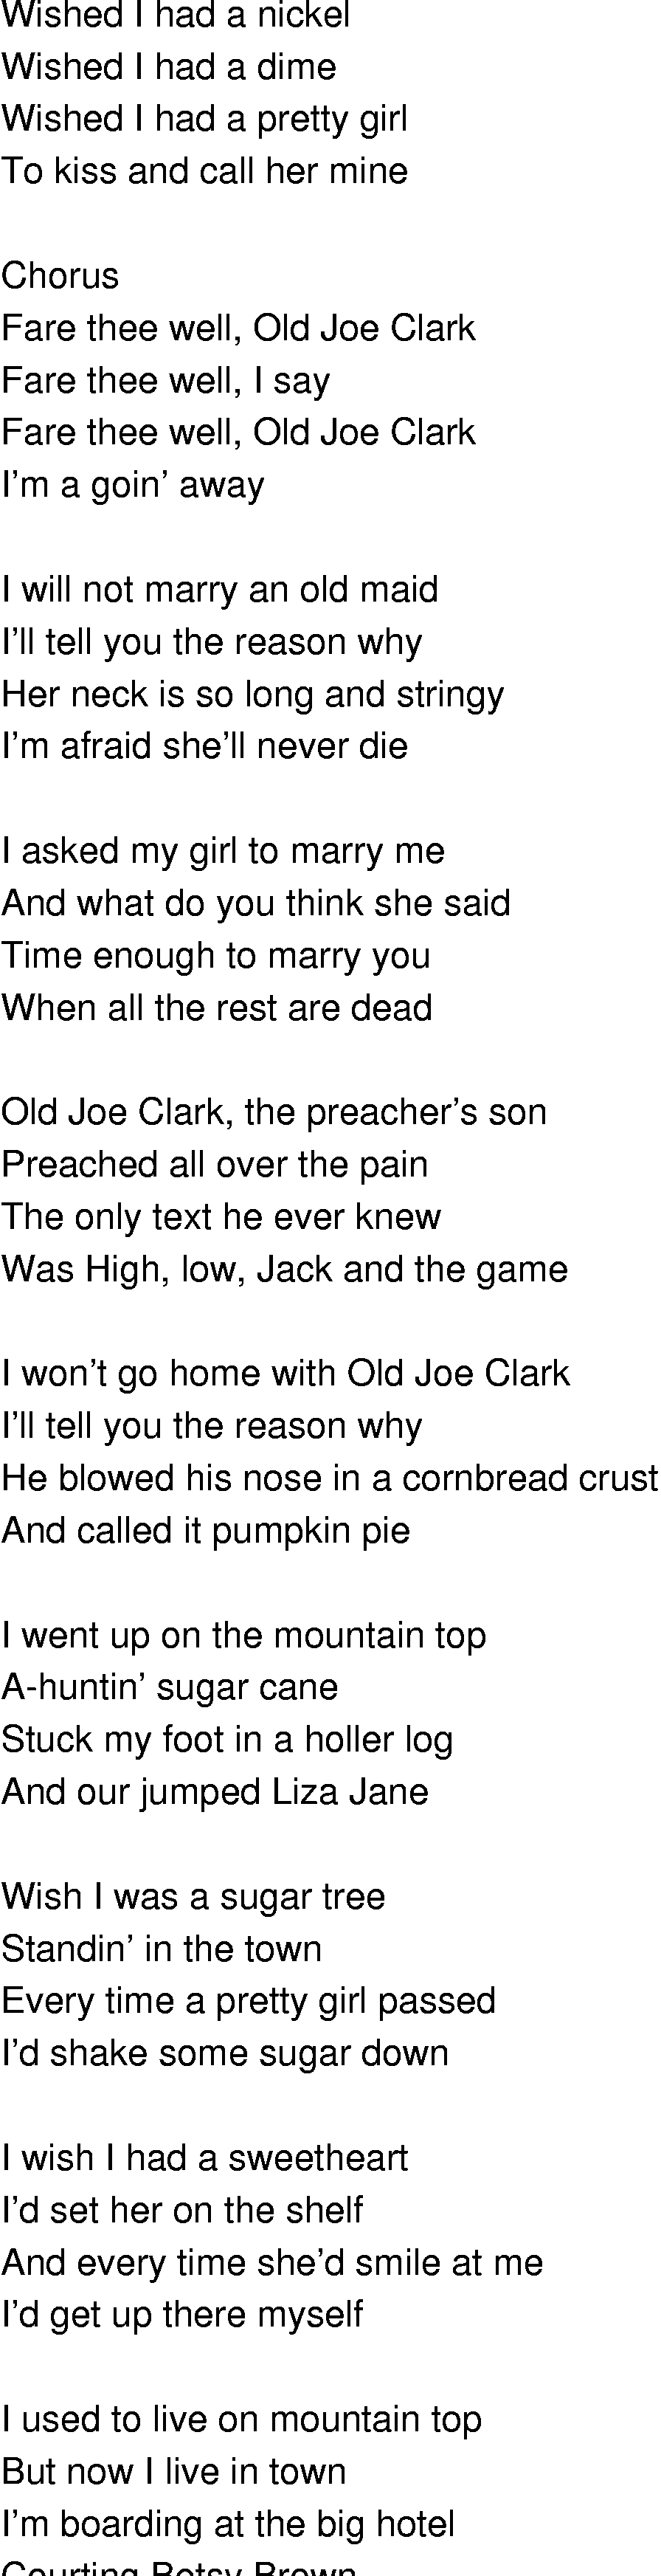 Old-Time (oldtimey) Song Lyrics - old joe clark